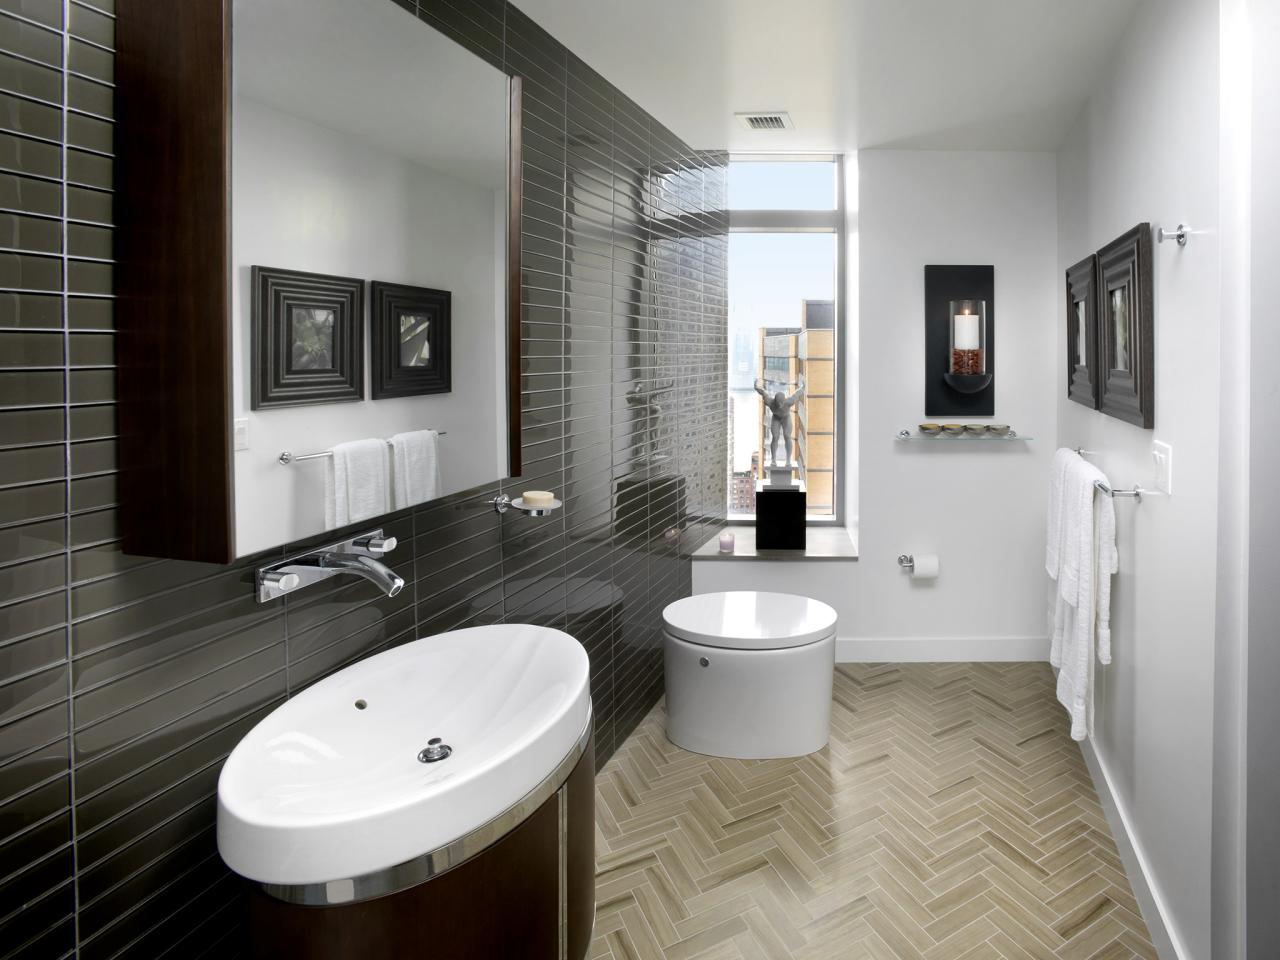 5 Must Try Small Bathroom Design Ideas, Office Bathroom Decorating Ideas